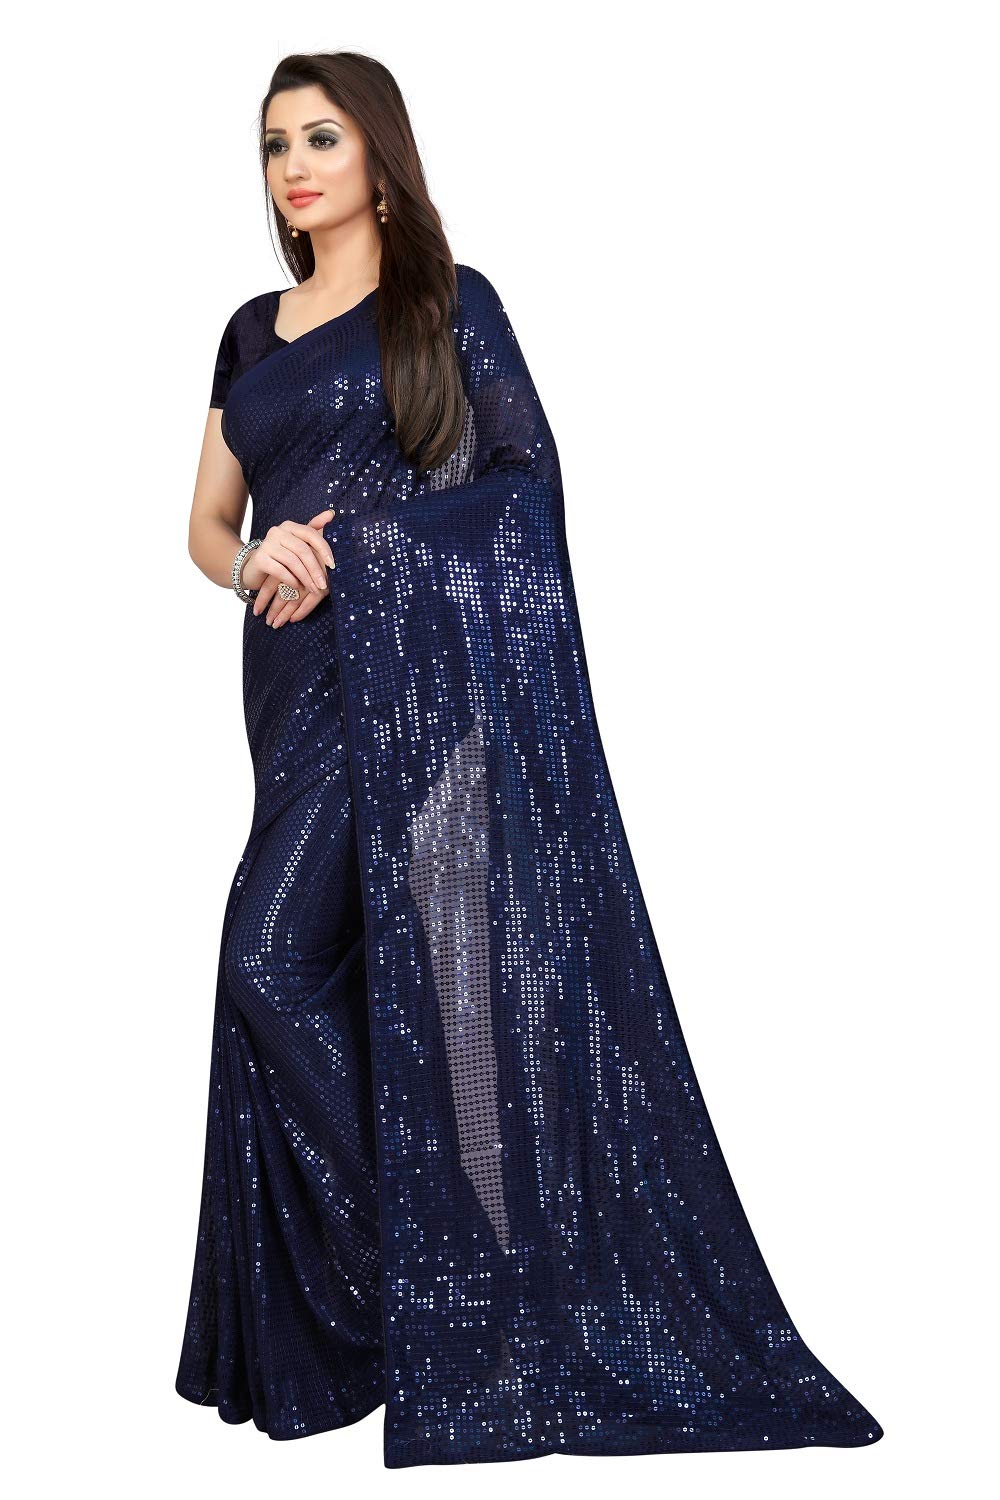 kfgroup Women's Woven Pure Georgette Saree Ethnic Dresses Wedding Sari with Blouse Piece